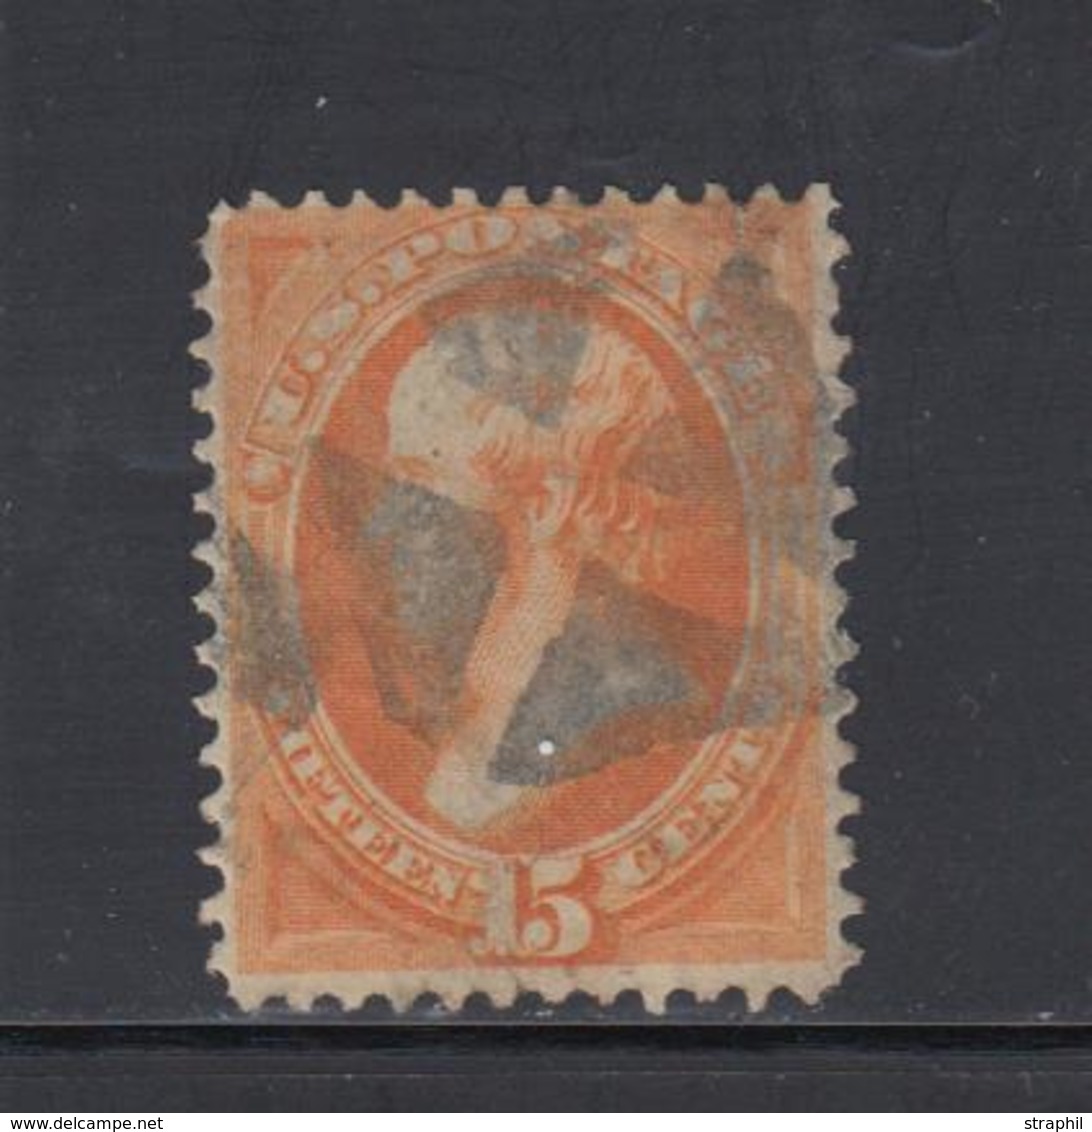 O ETATS-UNIS  - O - N°46 - 15c Orange - TB - Unused Stamps